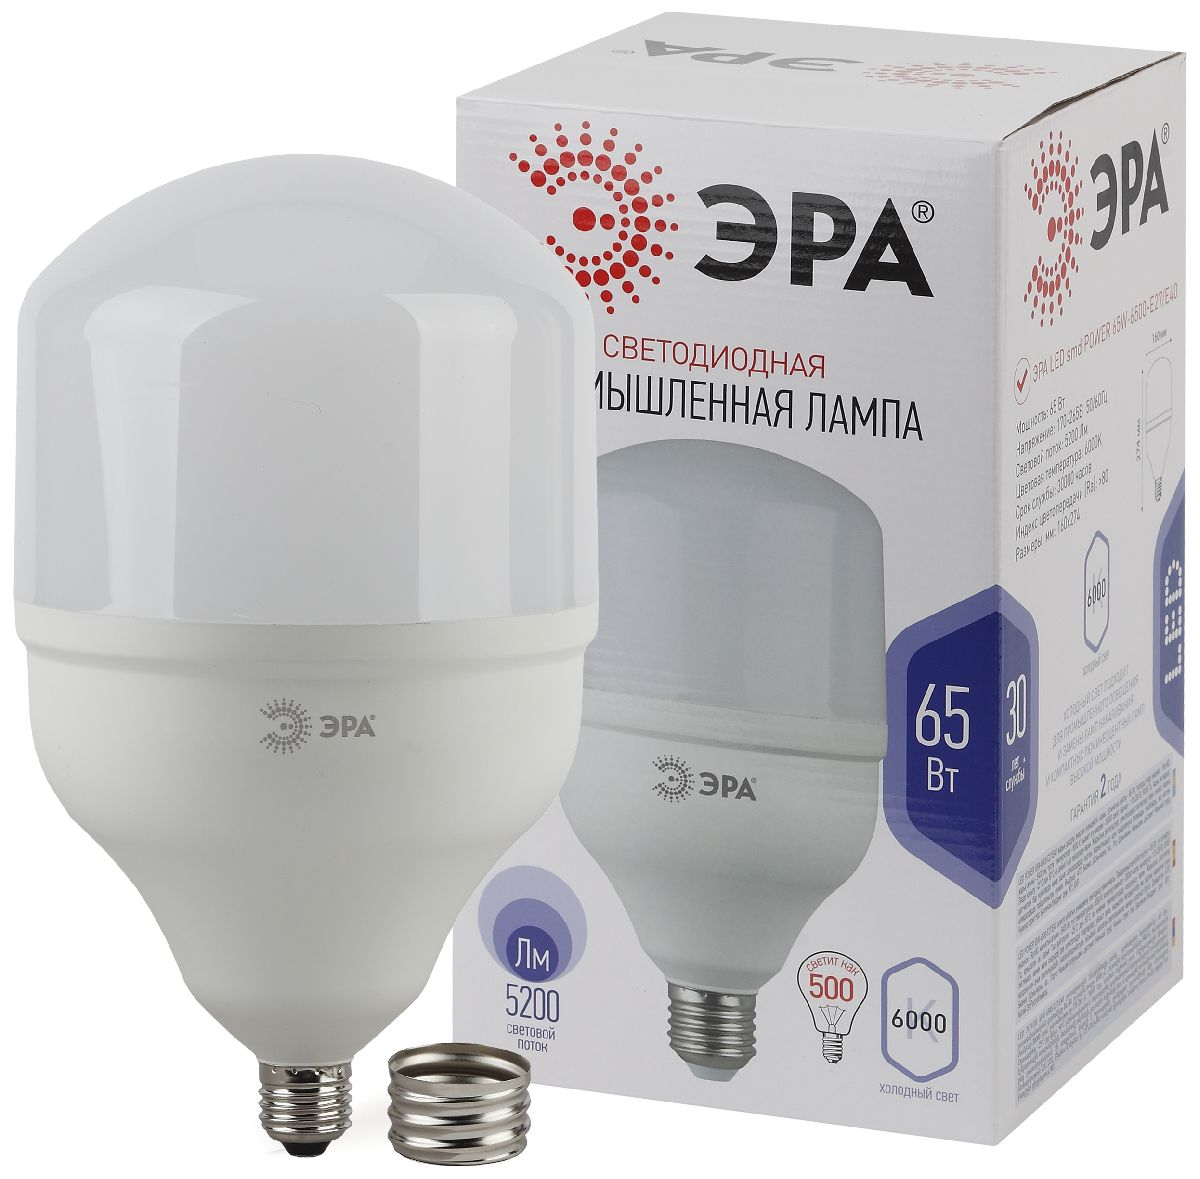 Лампа светодиодная Эра E40 65W 6500K LED POWER T160-65W-6500-E27/40 Б0049585